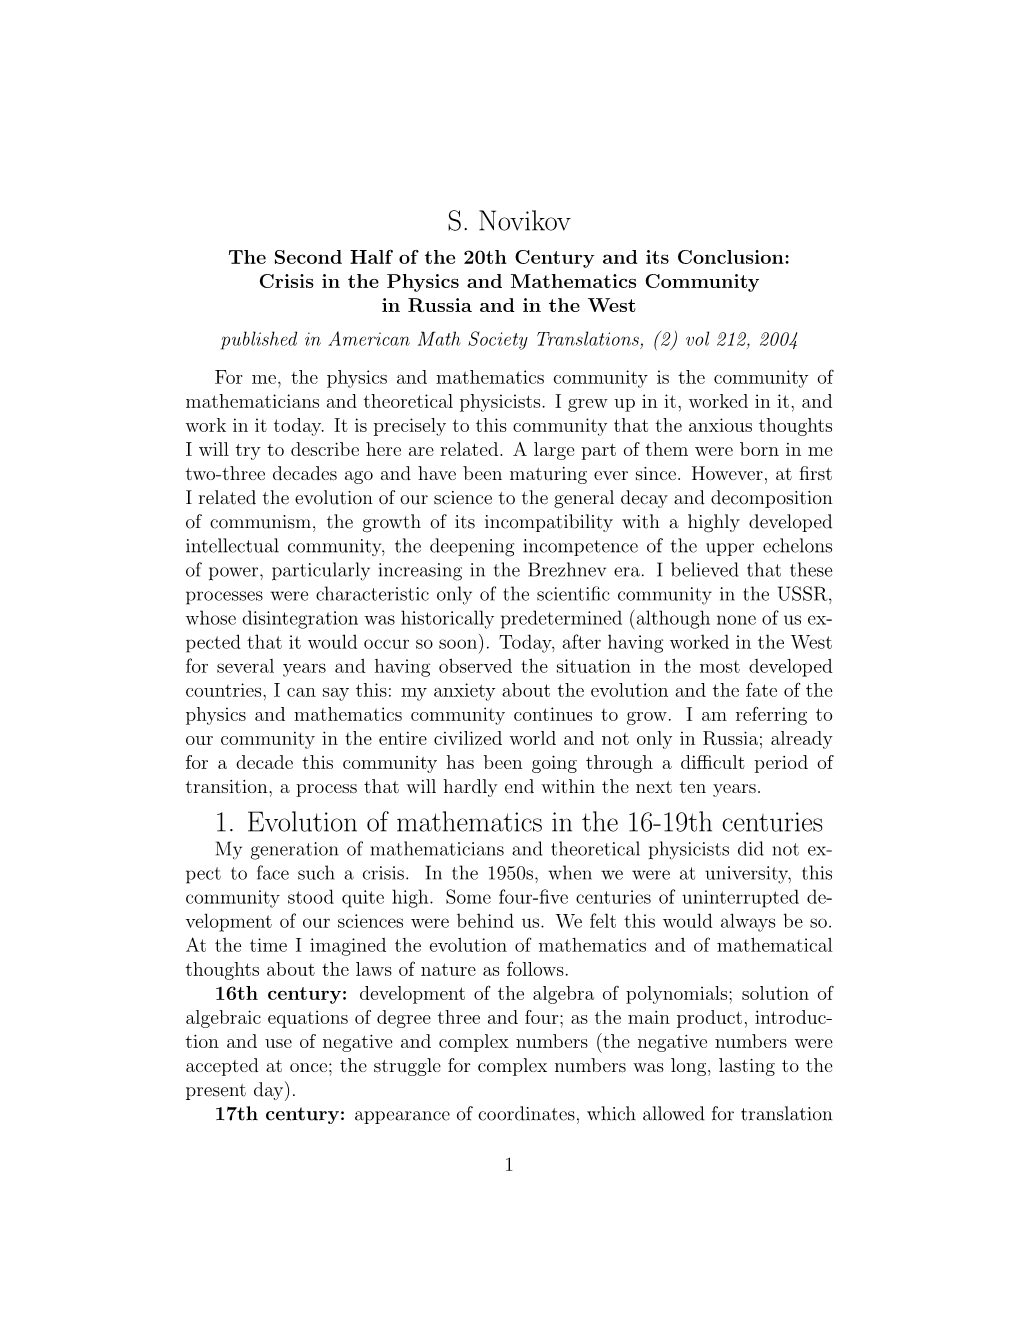 S. Novikov 1. Evolution of Mathematics in the 16-19Th Centuries